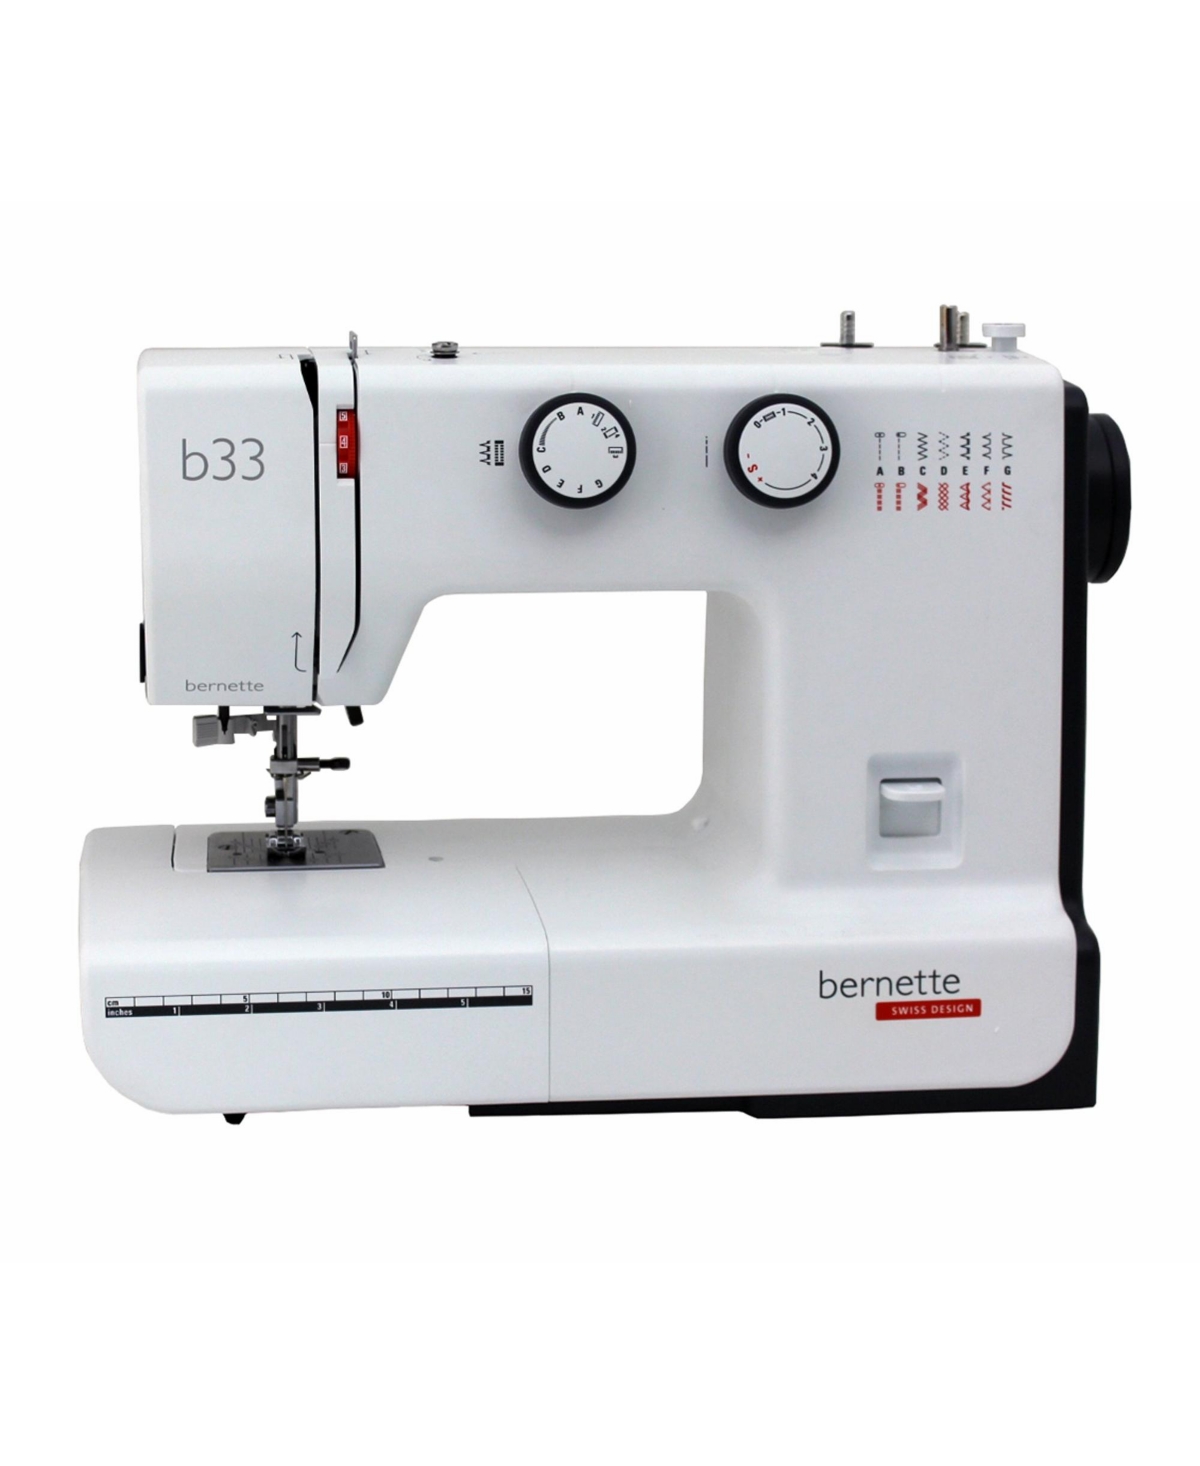 b33 Swiss Design Mechanical Sewing Machine - White